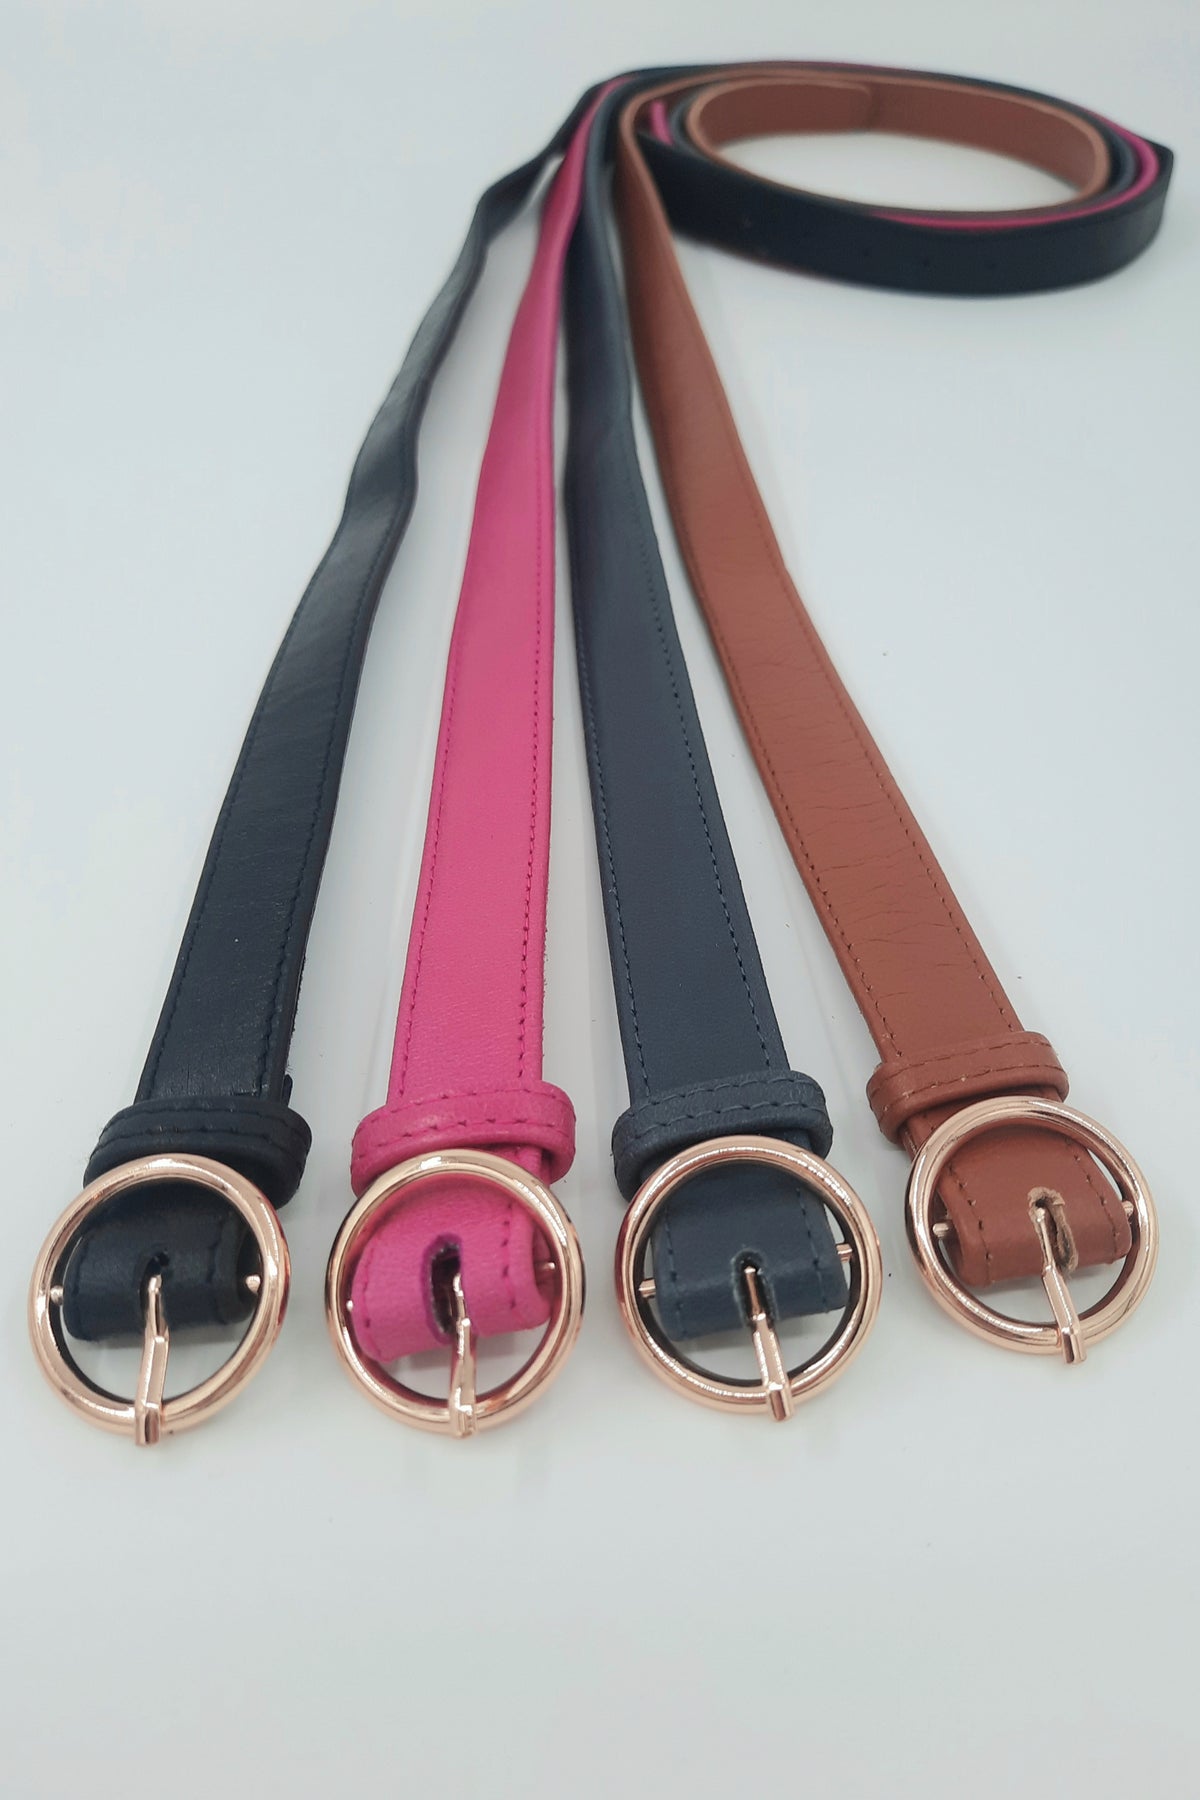 Pippa Leather Belt Raspberry